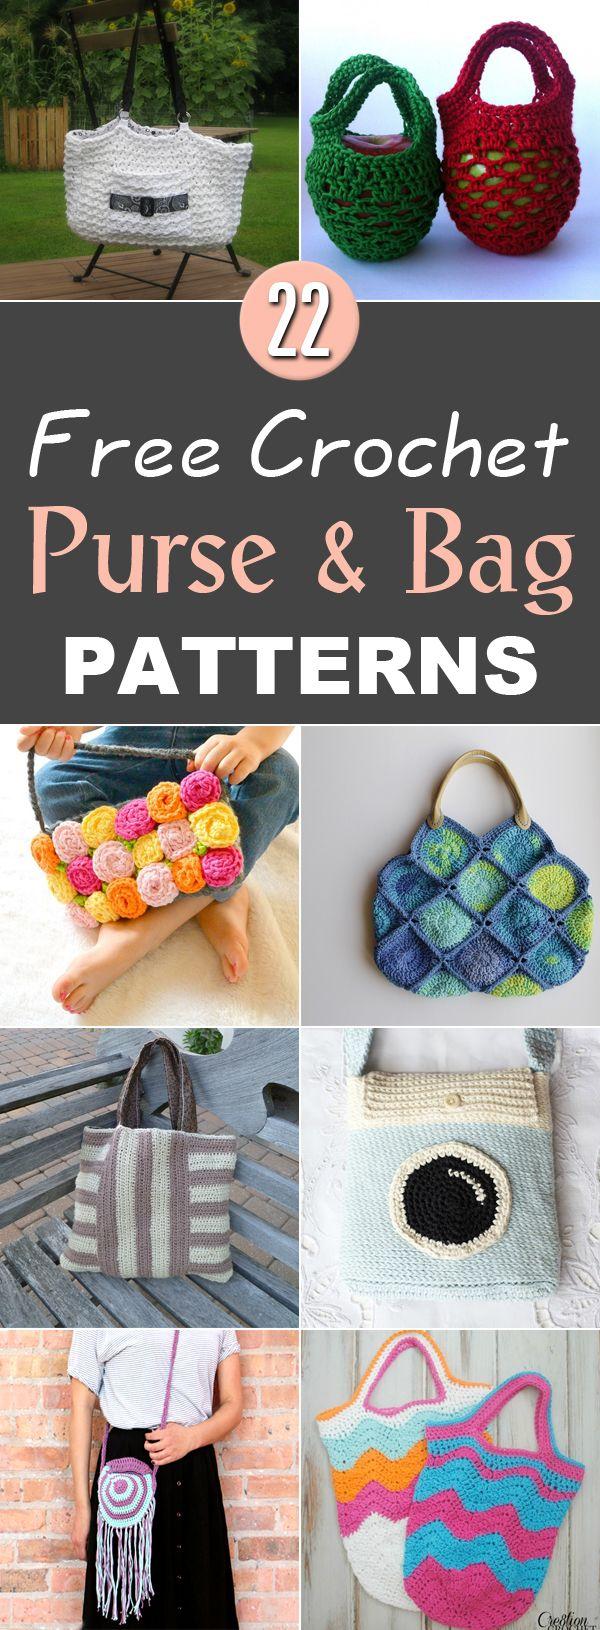 Hochzeit - 22 Free Crochet Purse & Bag Patterns